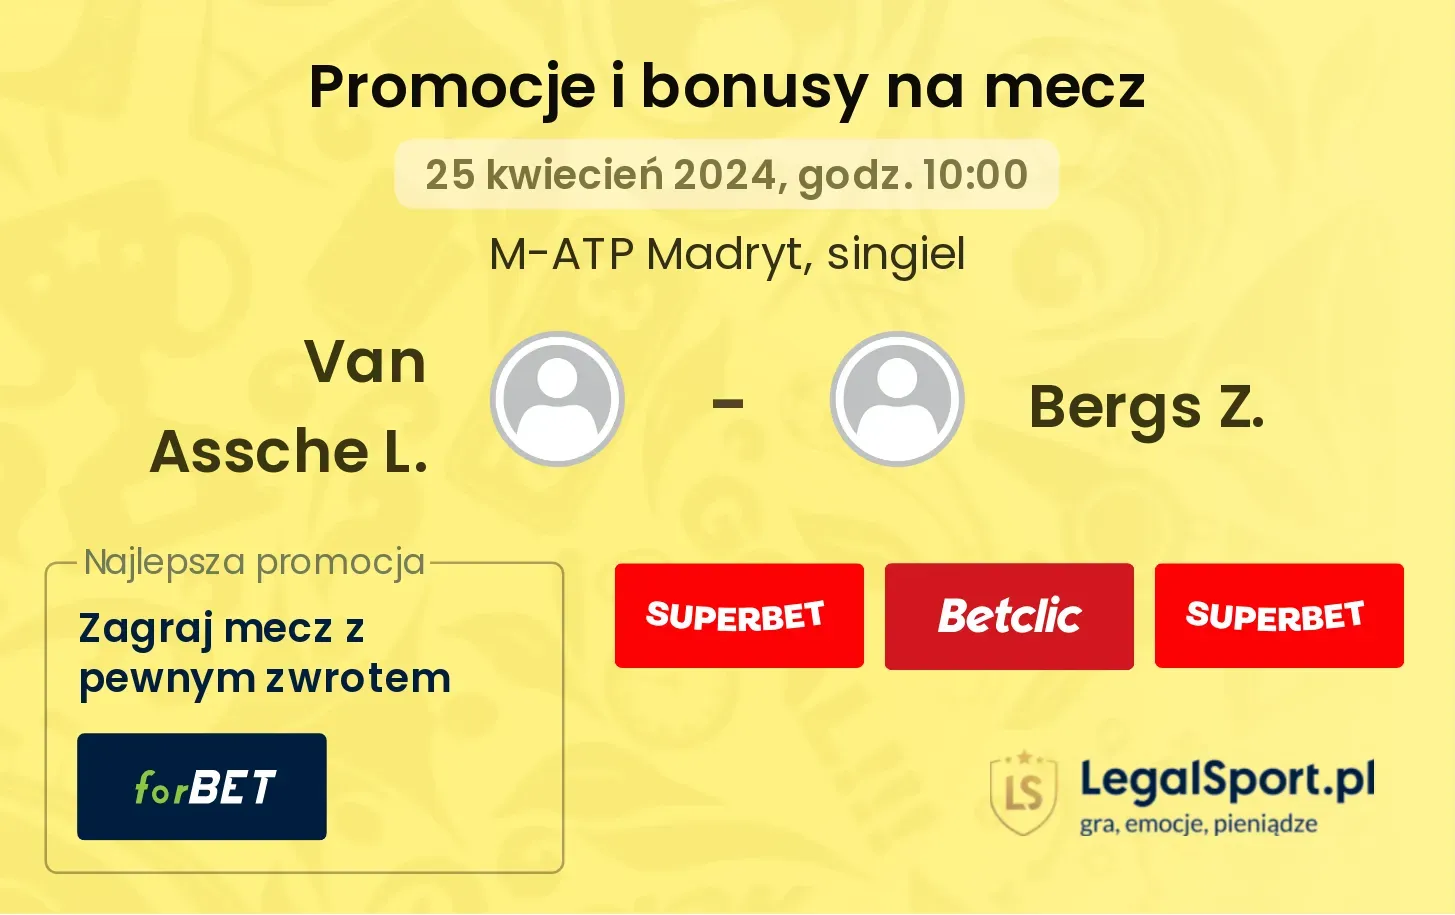 Van Assche L. - Bergs Z. promocje bonusy na mecz